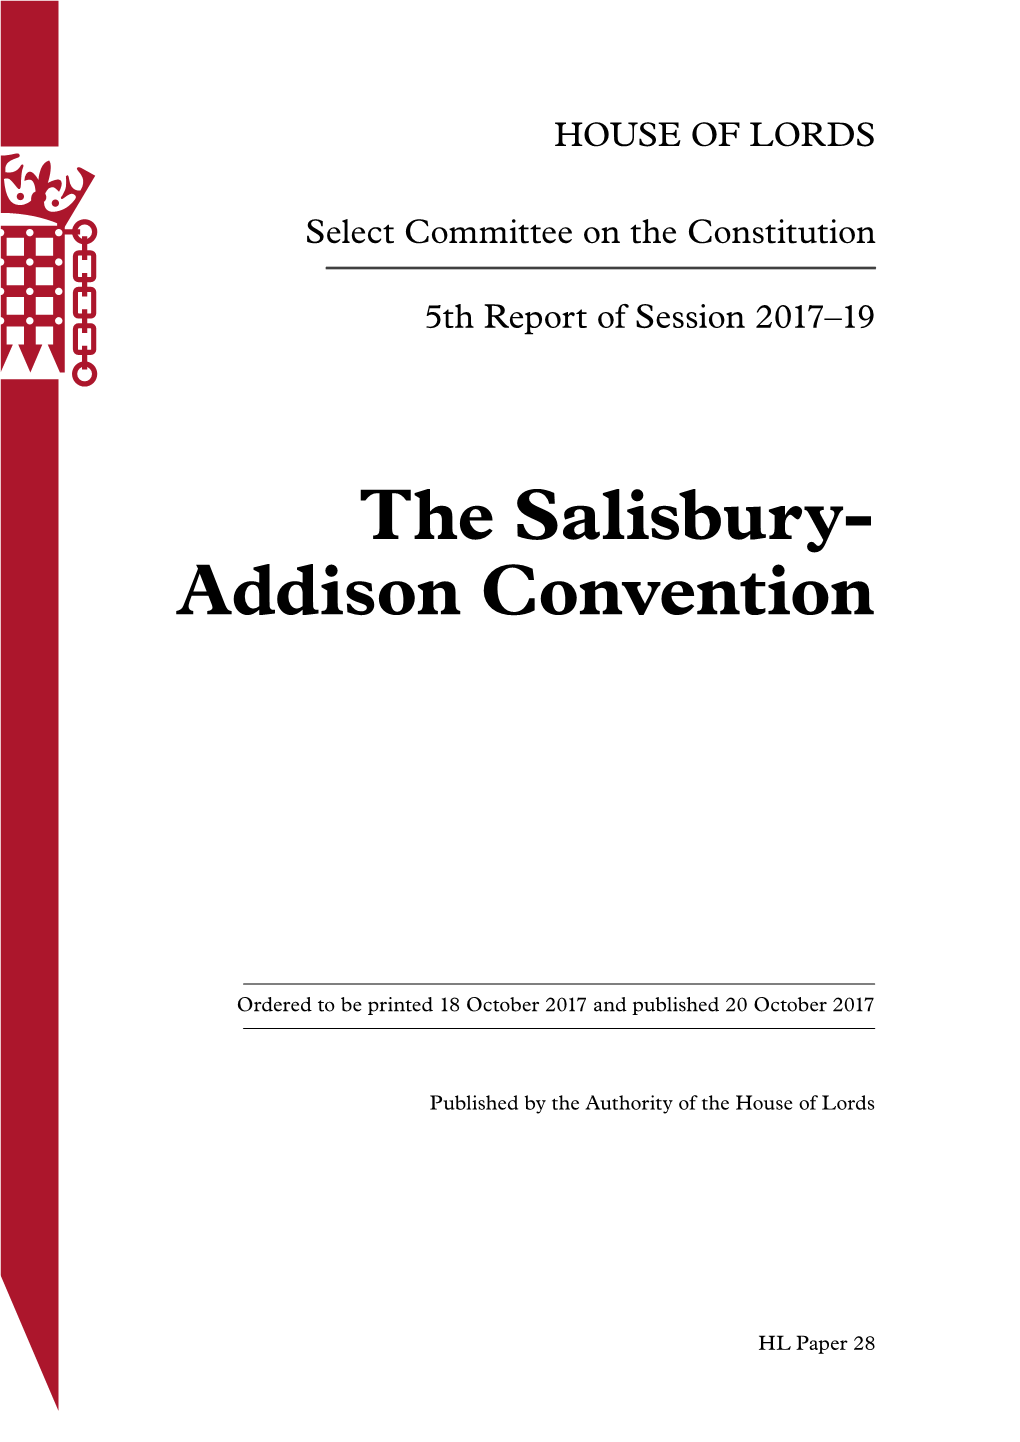 The Salisbury-Addison Convention